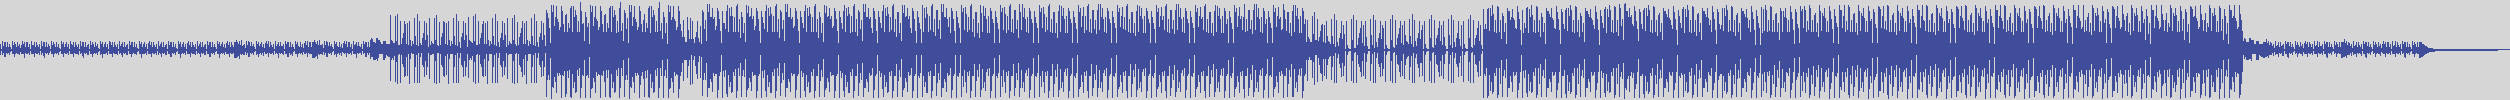 nf_boyz_records [NFY014] Dj Muppet - Supalova Tools [Tribal Mix] audio wave form